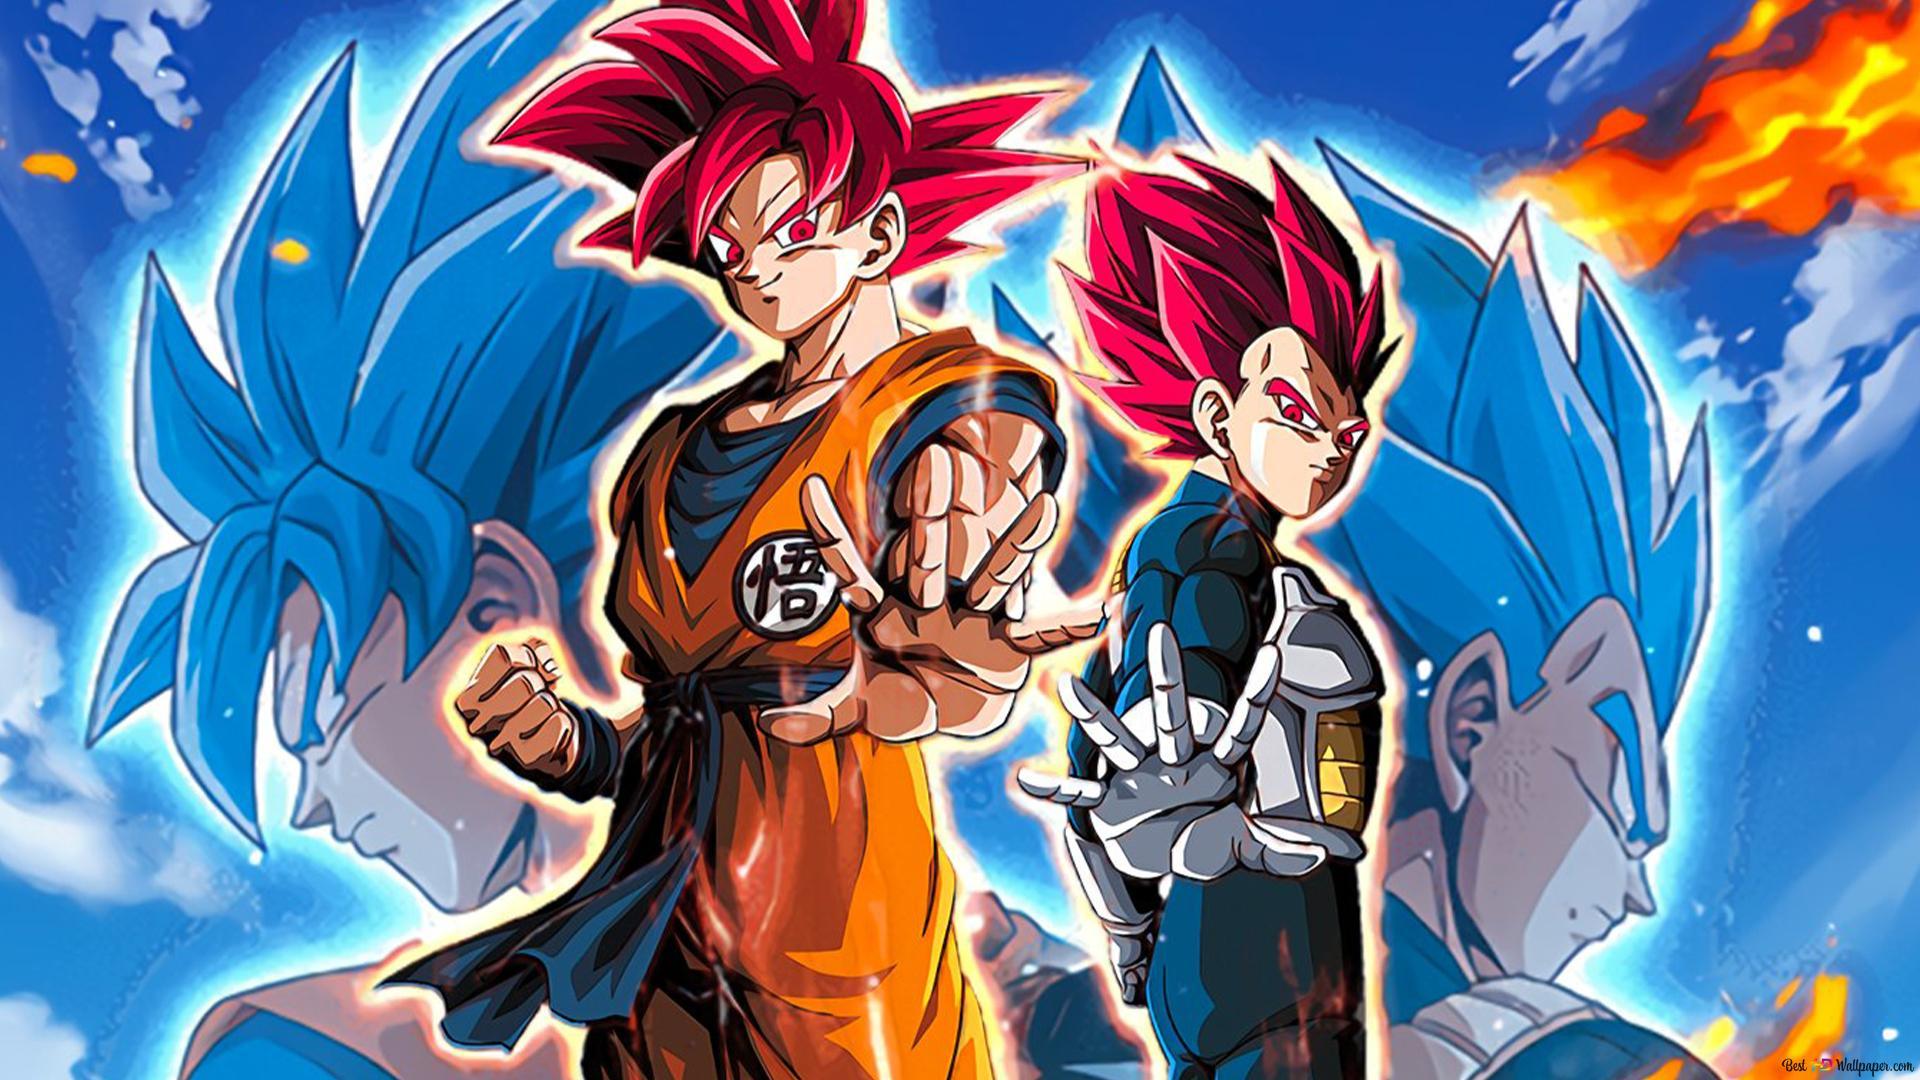 Goku and Vegeta Desktop Wallpapers - Top Free Goku and Vegeta Desktop ...